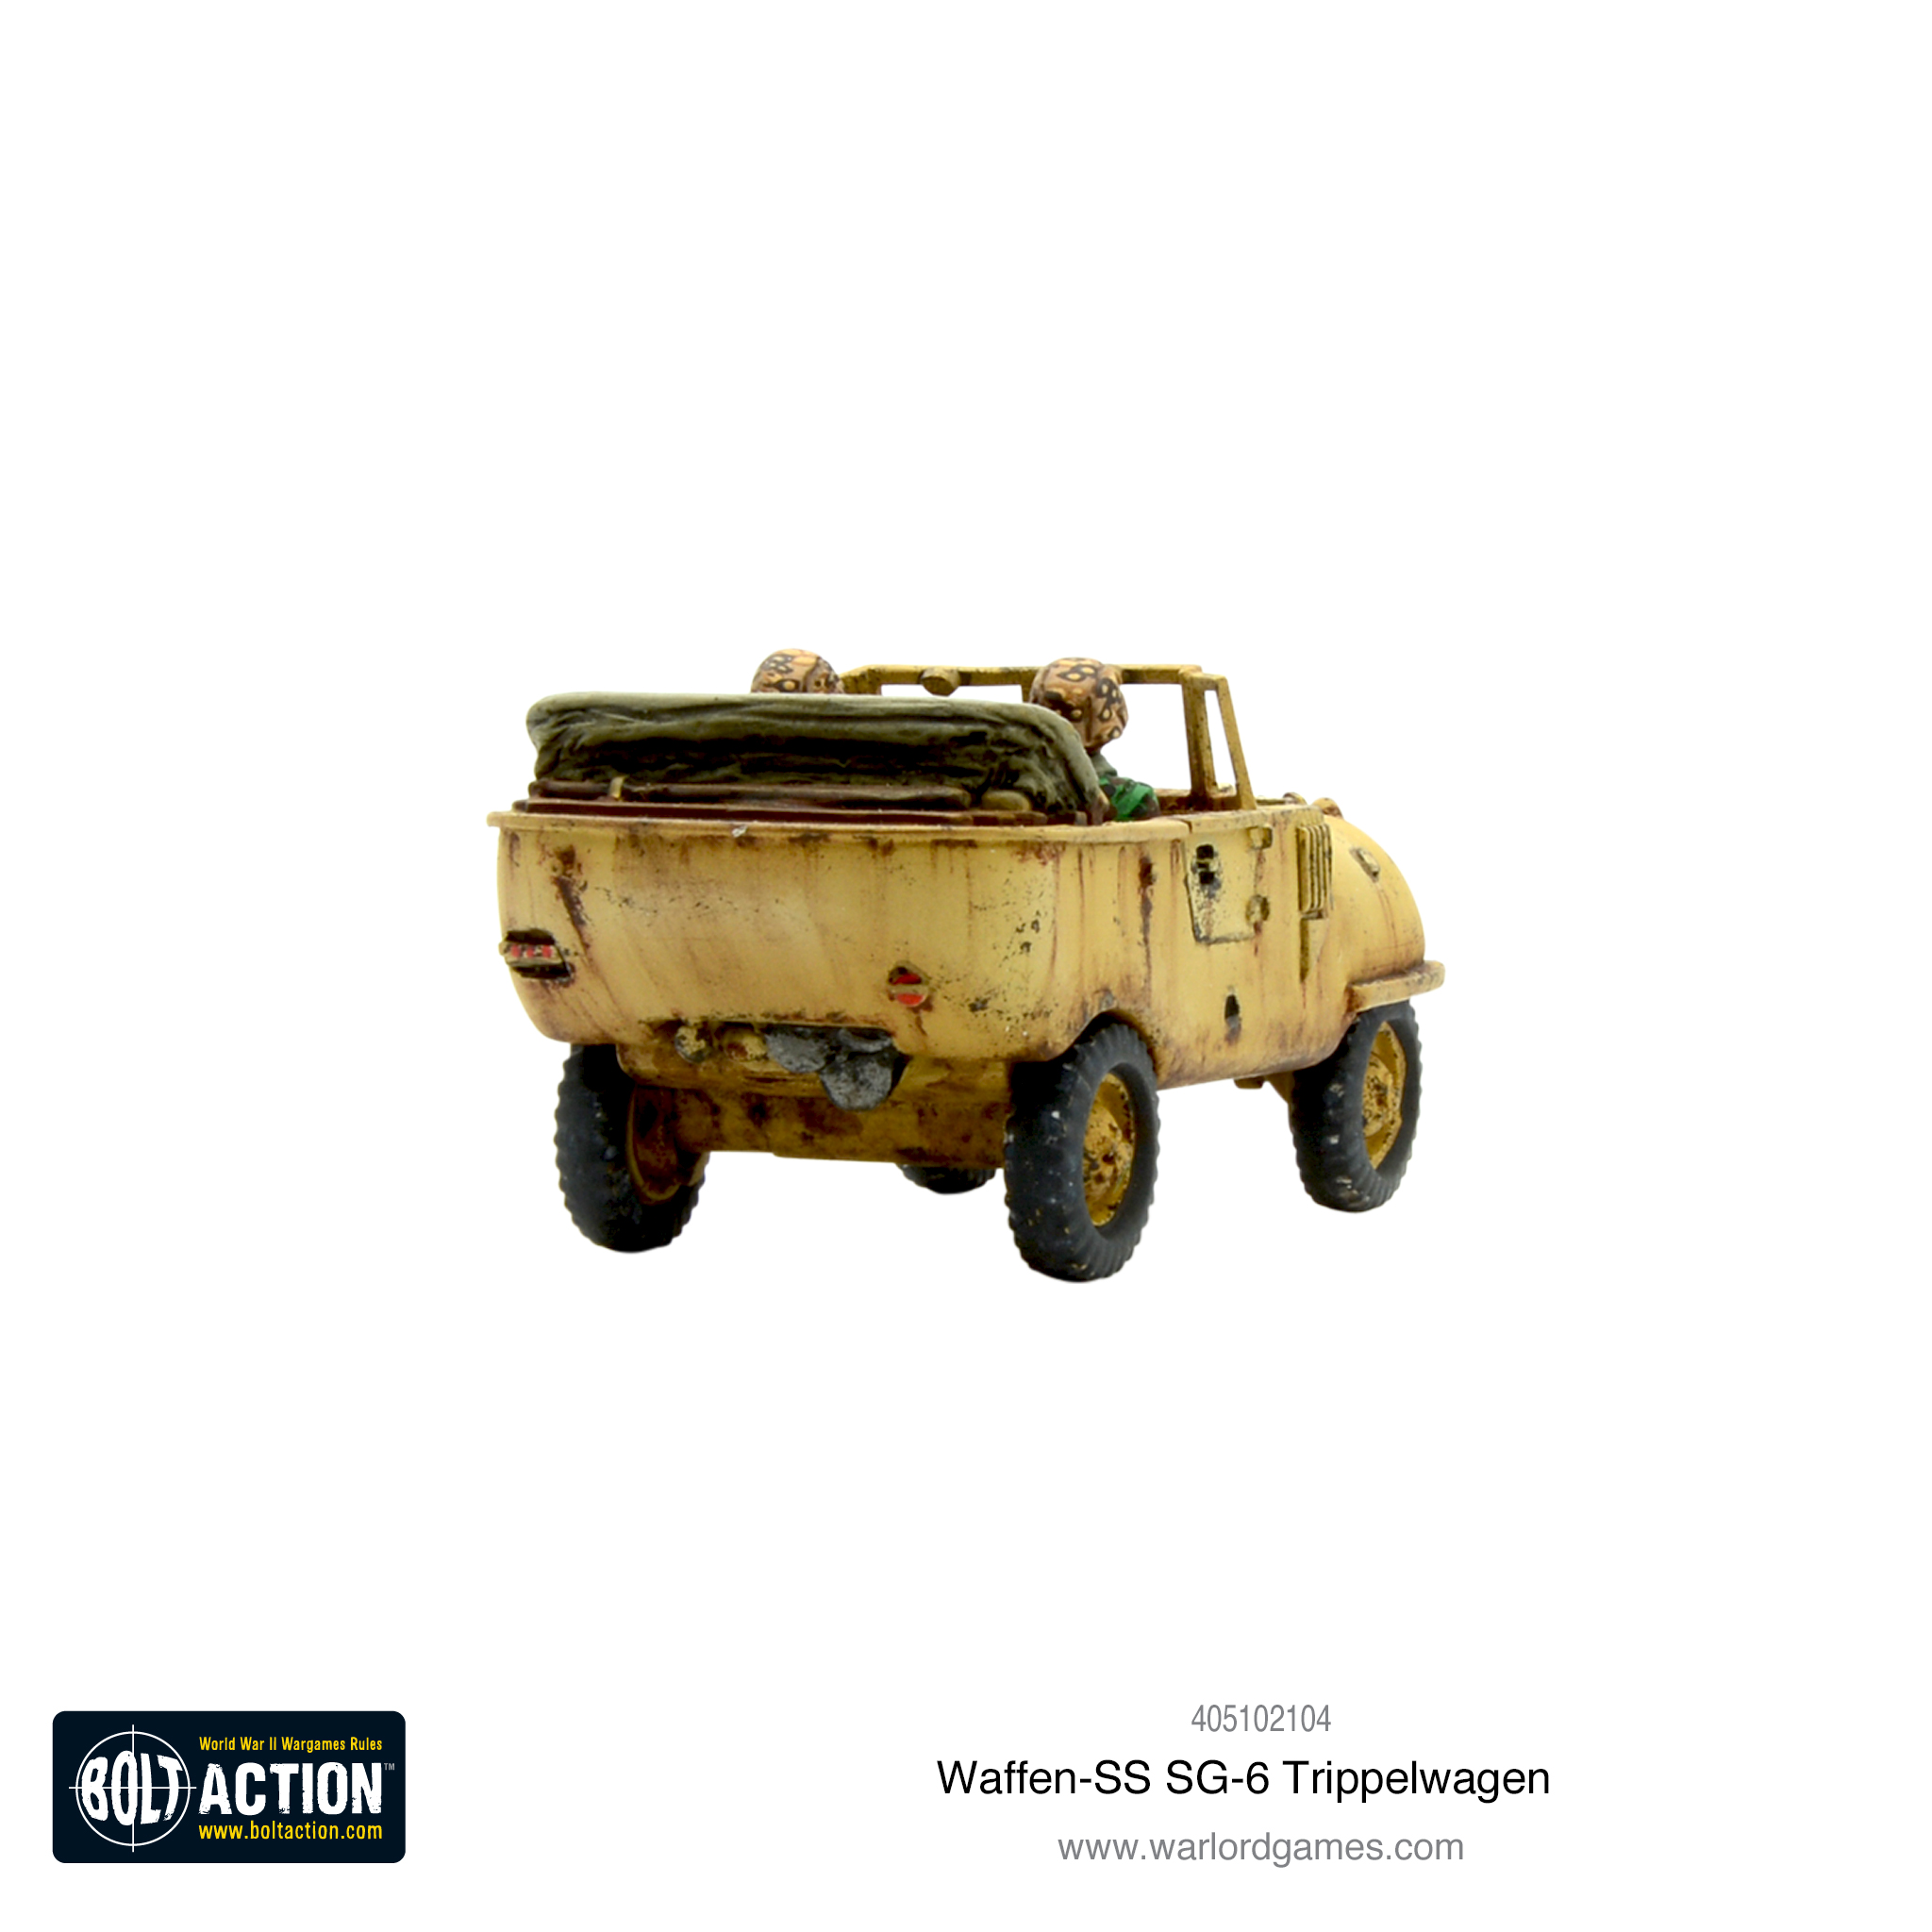 Waffen-SS SG-6 Trippelwagen